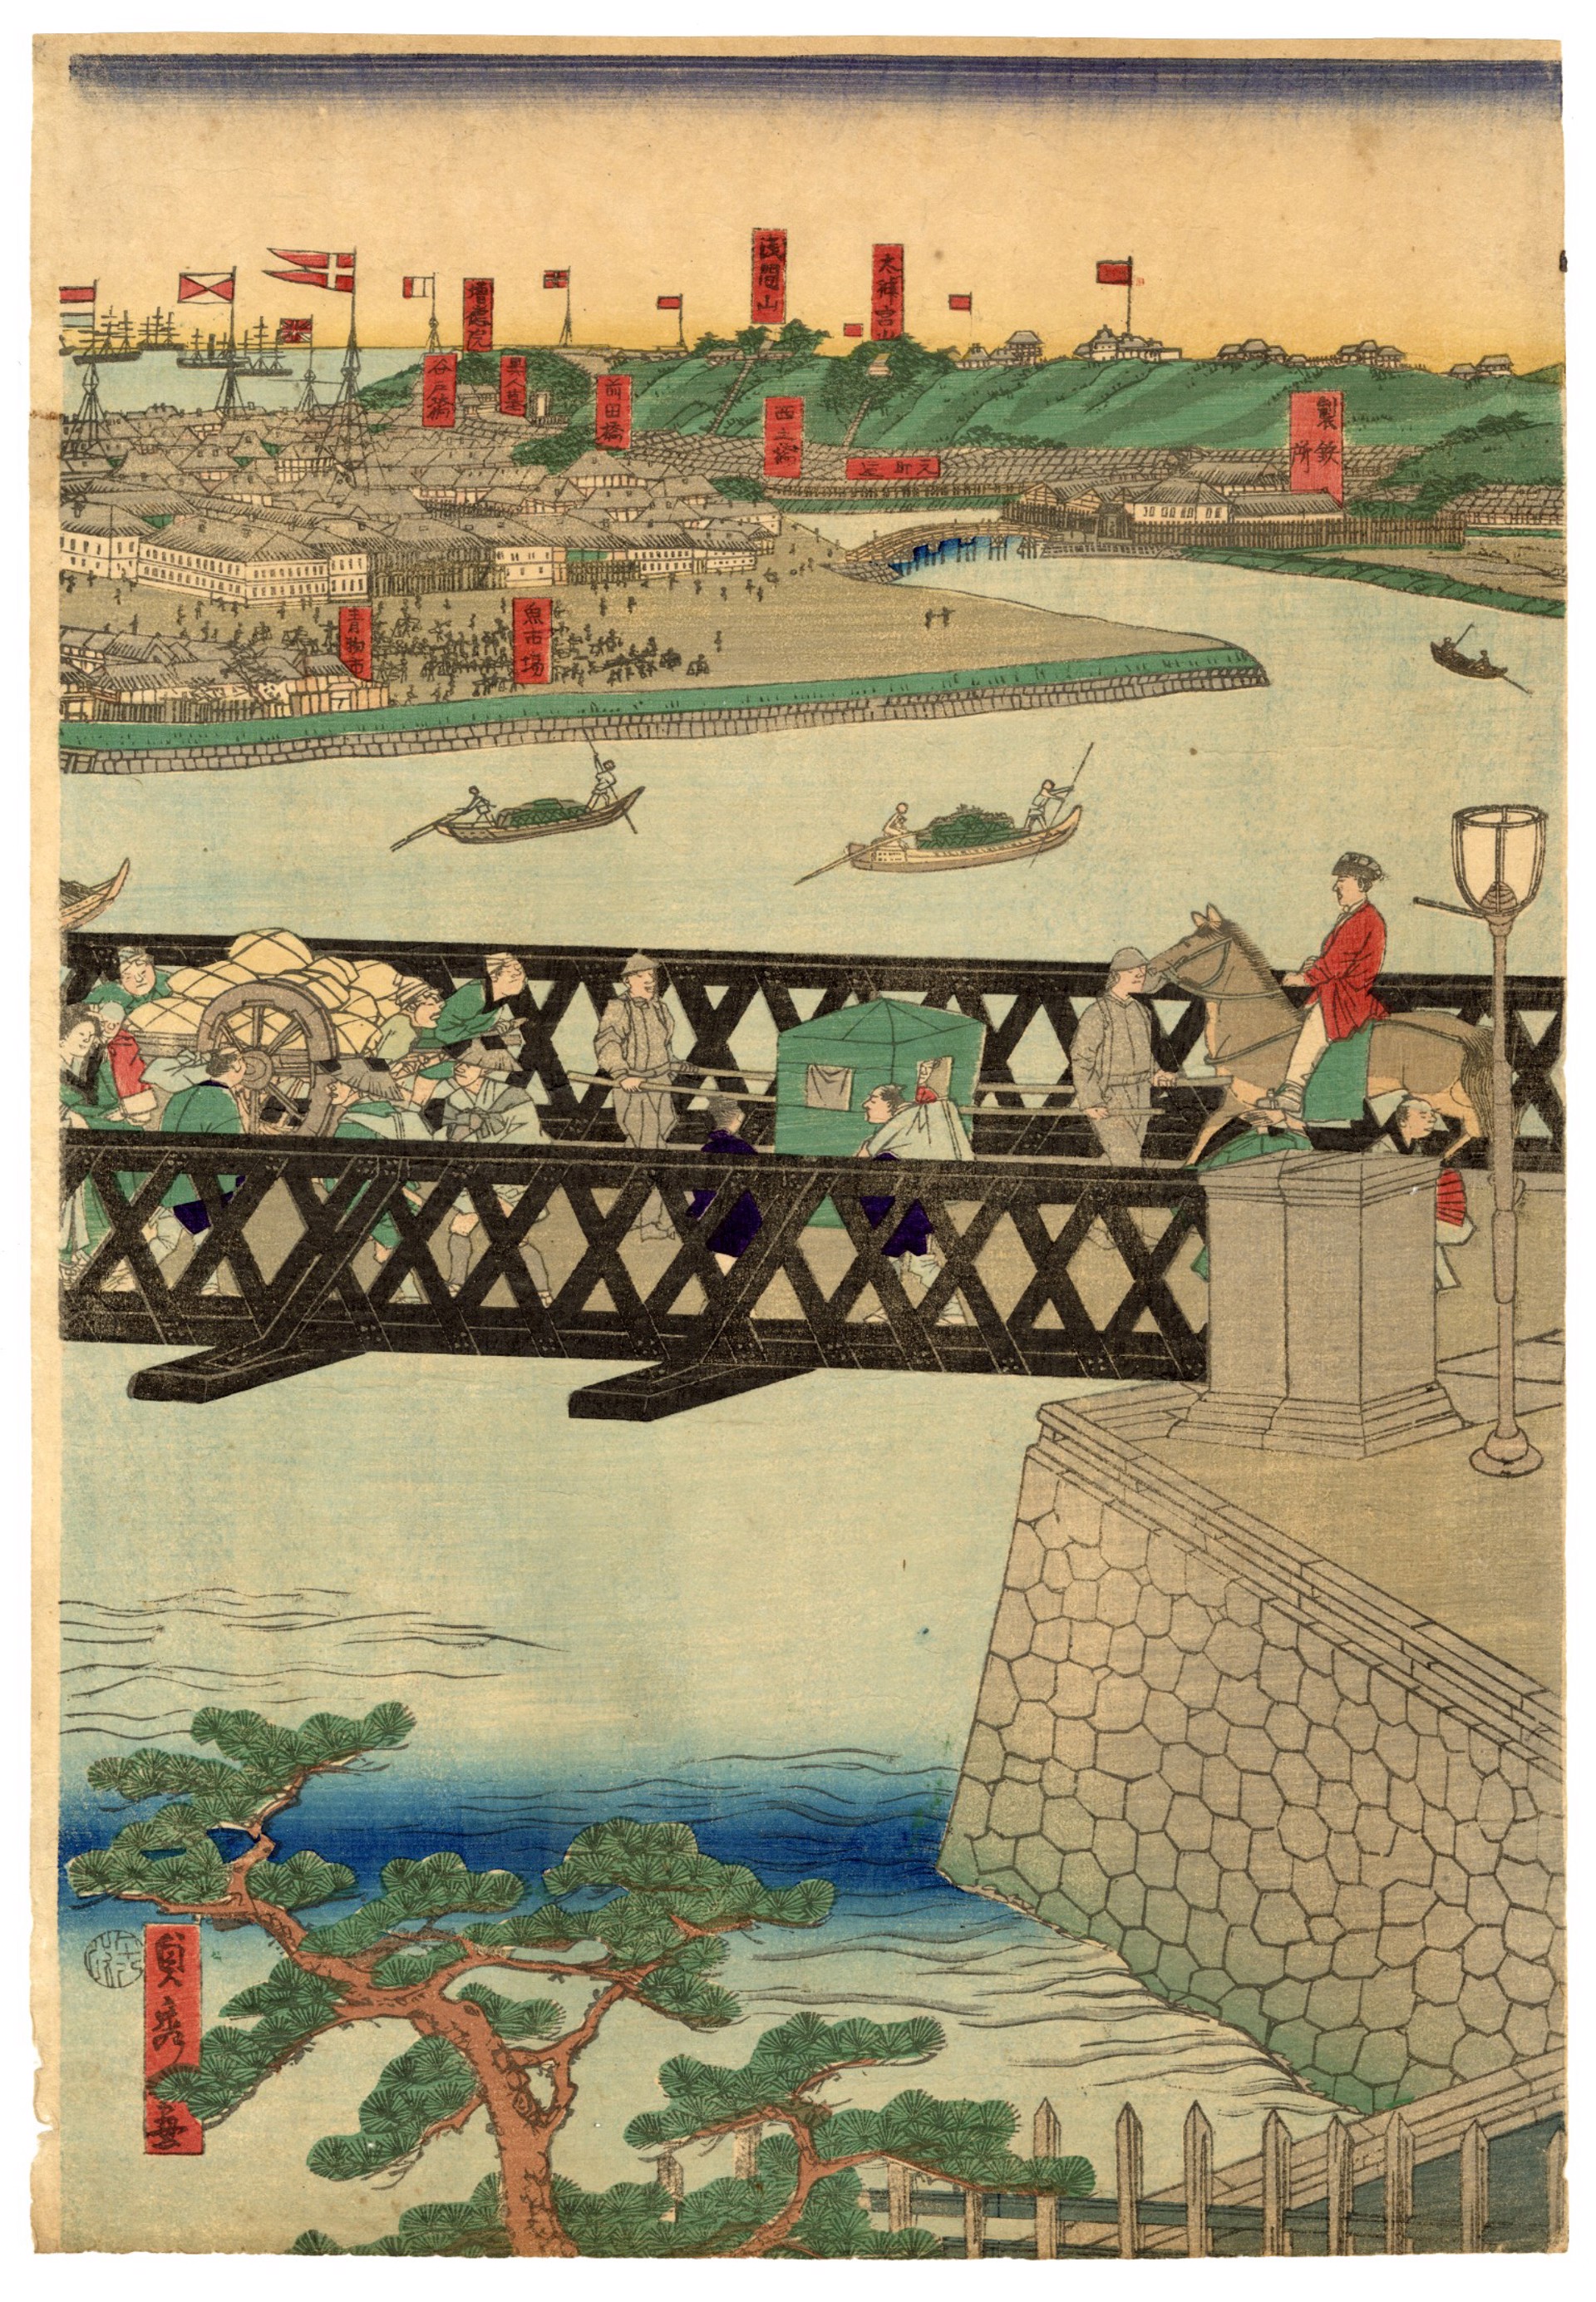 The Iron Bridge at Yokohama by Sadahide